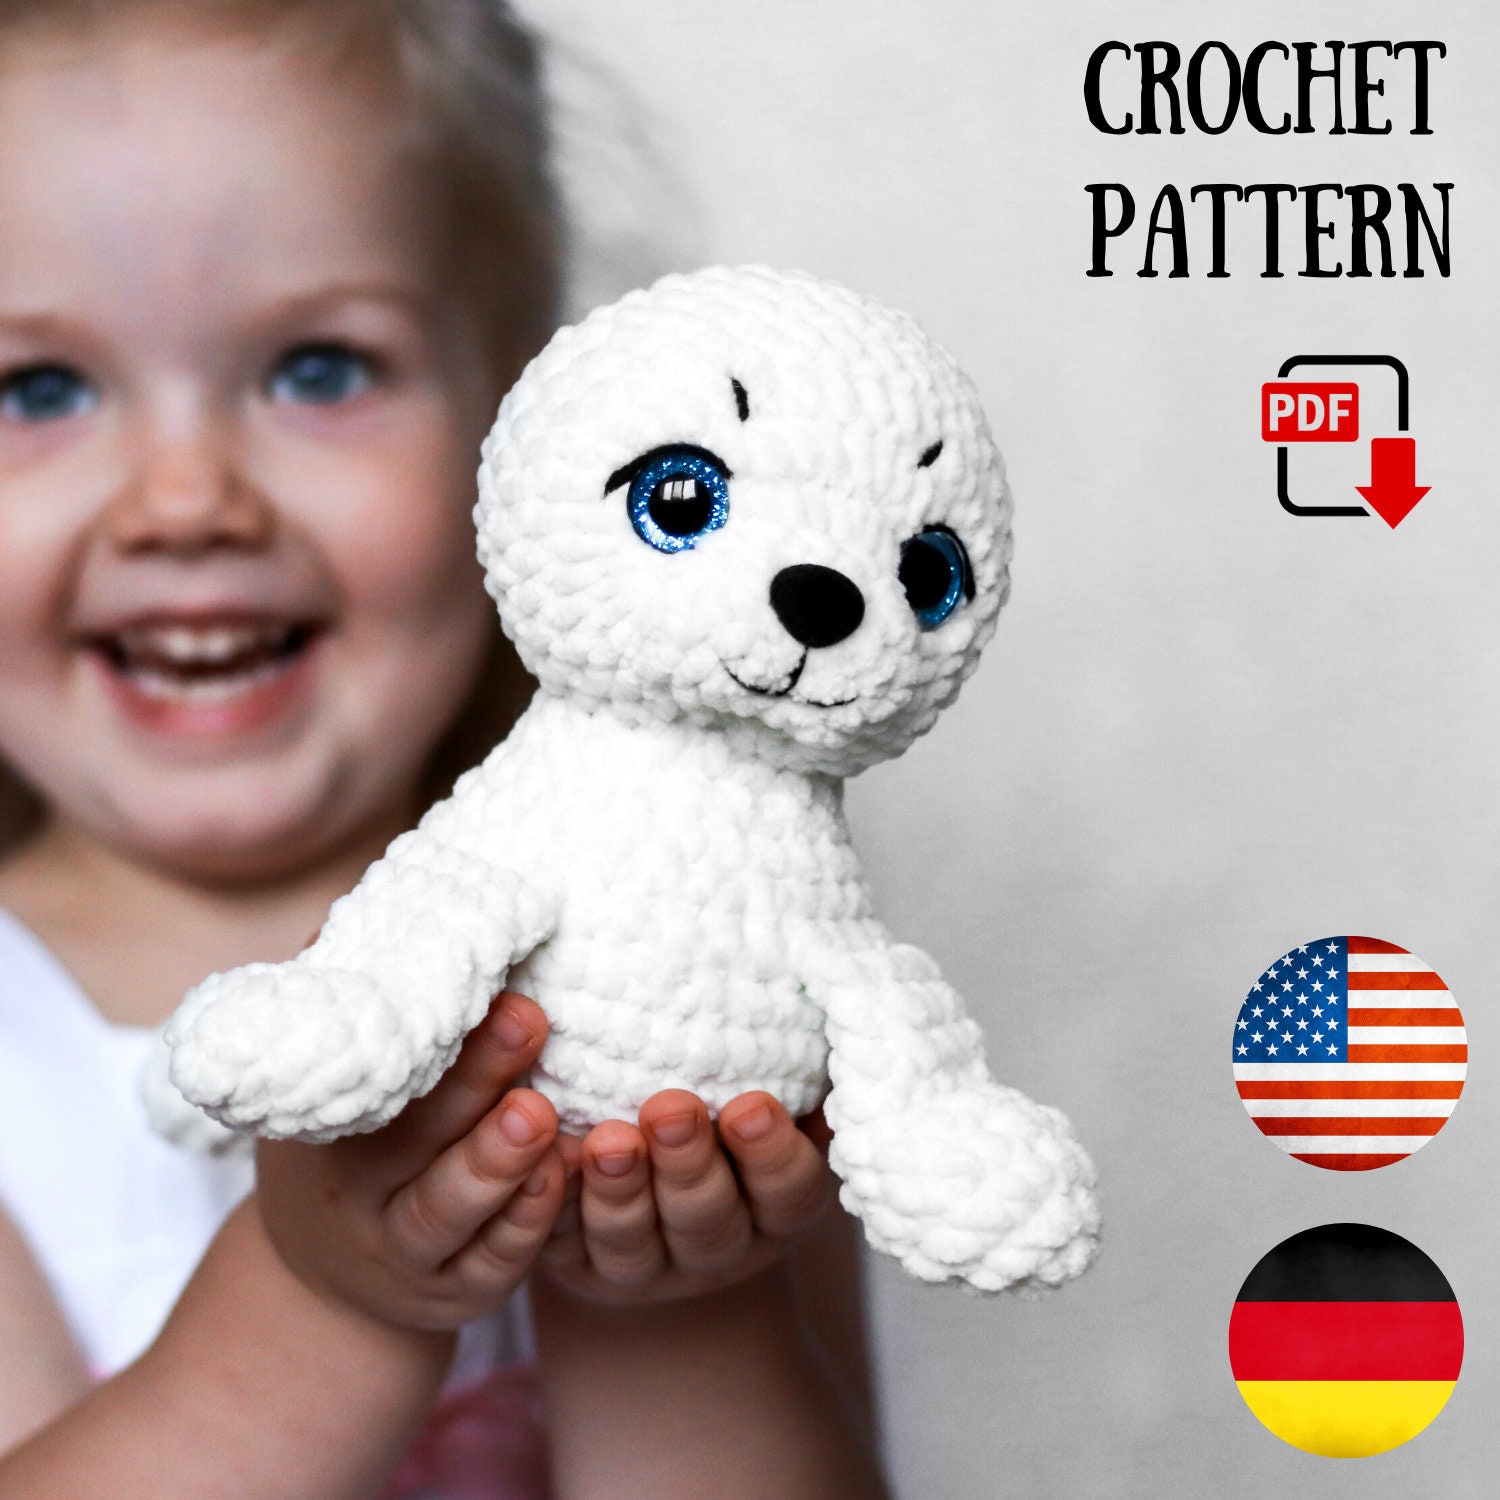 Crochet CHUBBY SEAL Keychain, Cute Amigurumi Seal, Handmade Gift for Friend  or for Yourself,keychain for Backpack,plush Animal, Crochet Art 